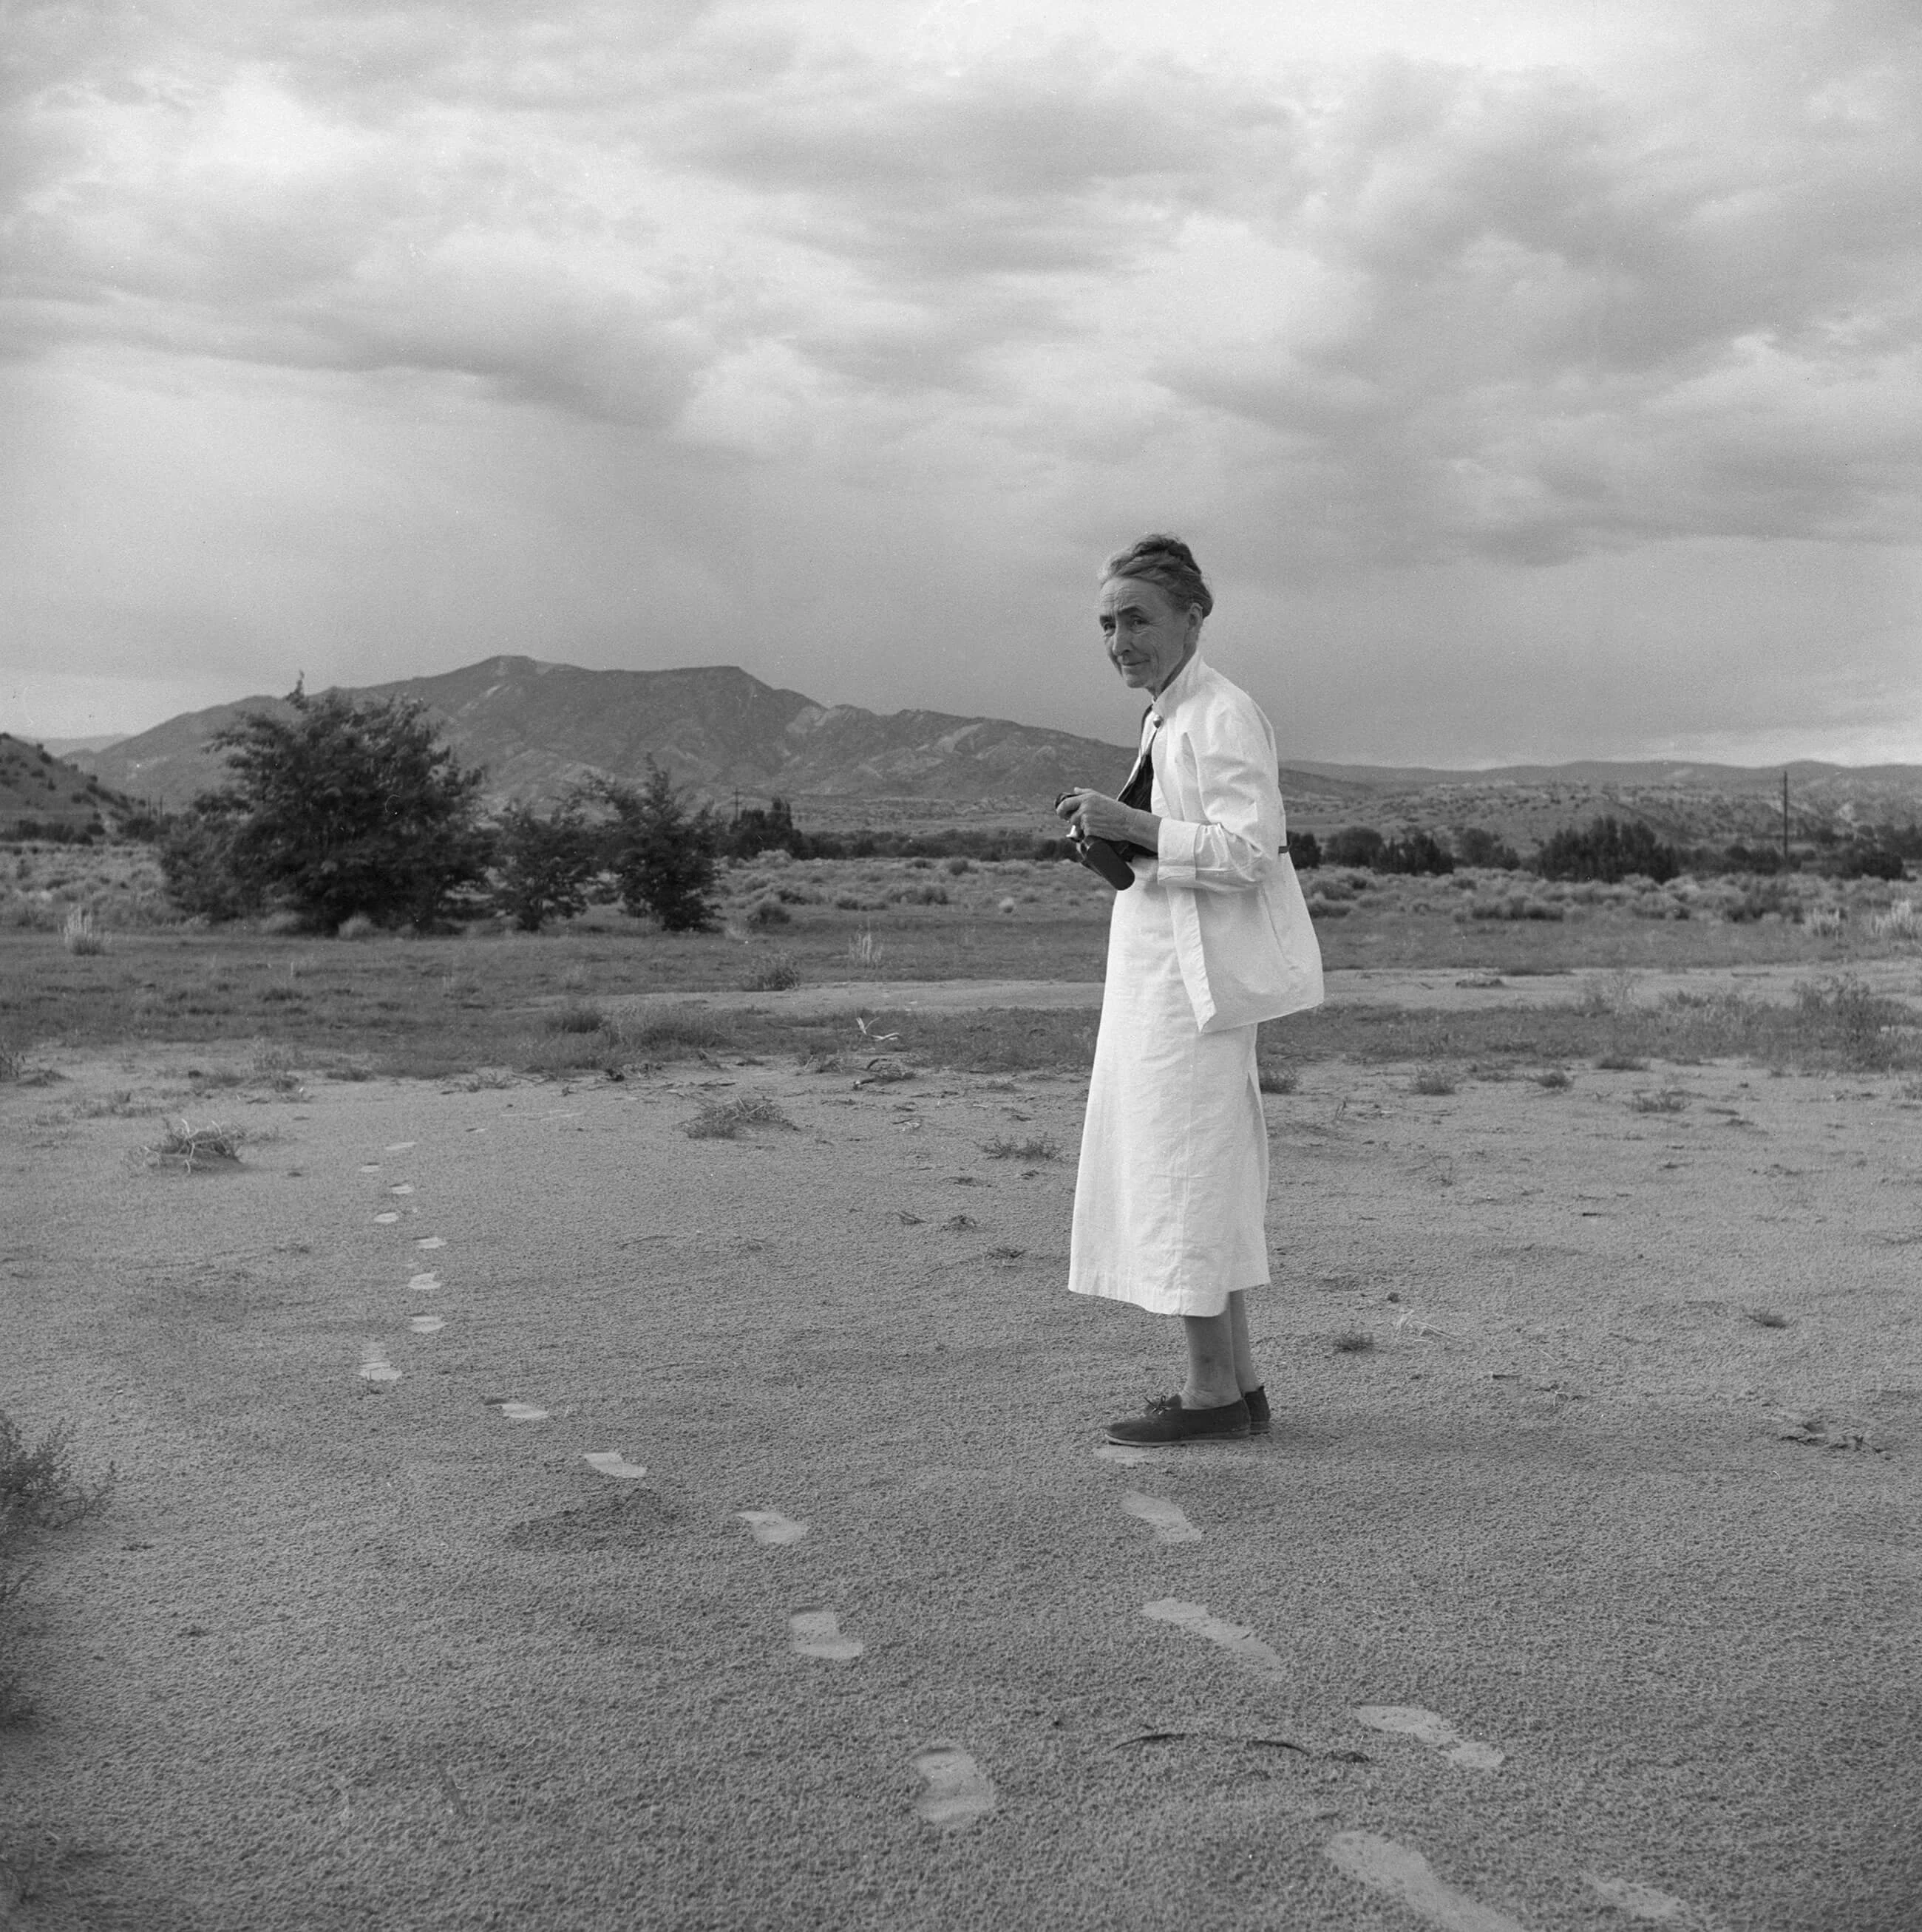 Georgia O'Keeffe photographing Near Abiquiu, New Mexico, 1959